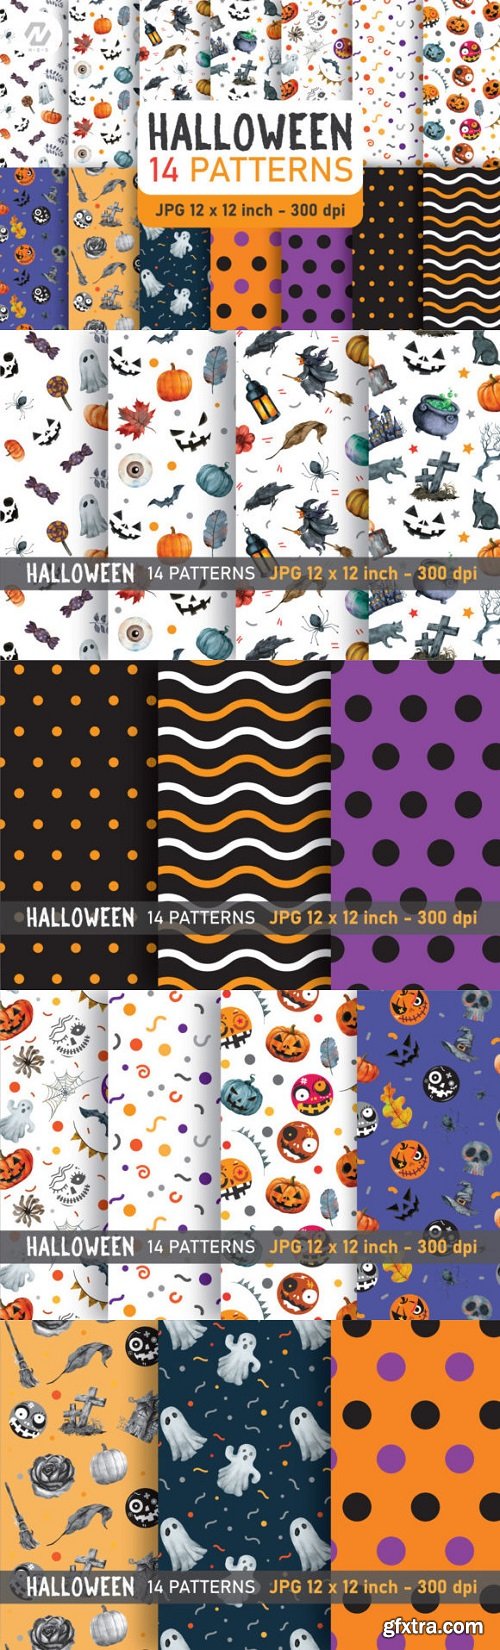 Halloween digital paper pattern bundle